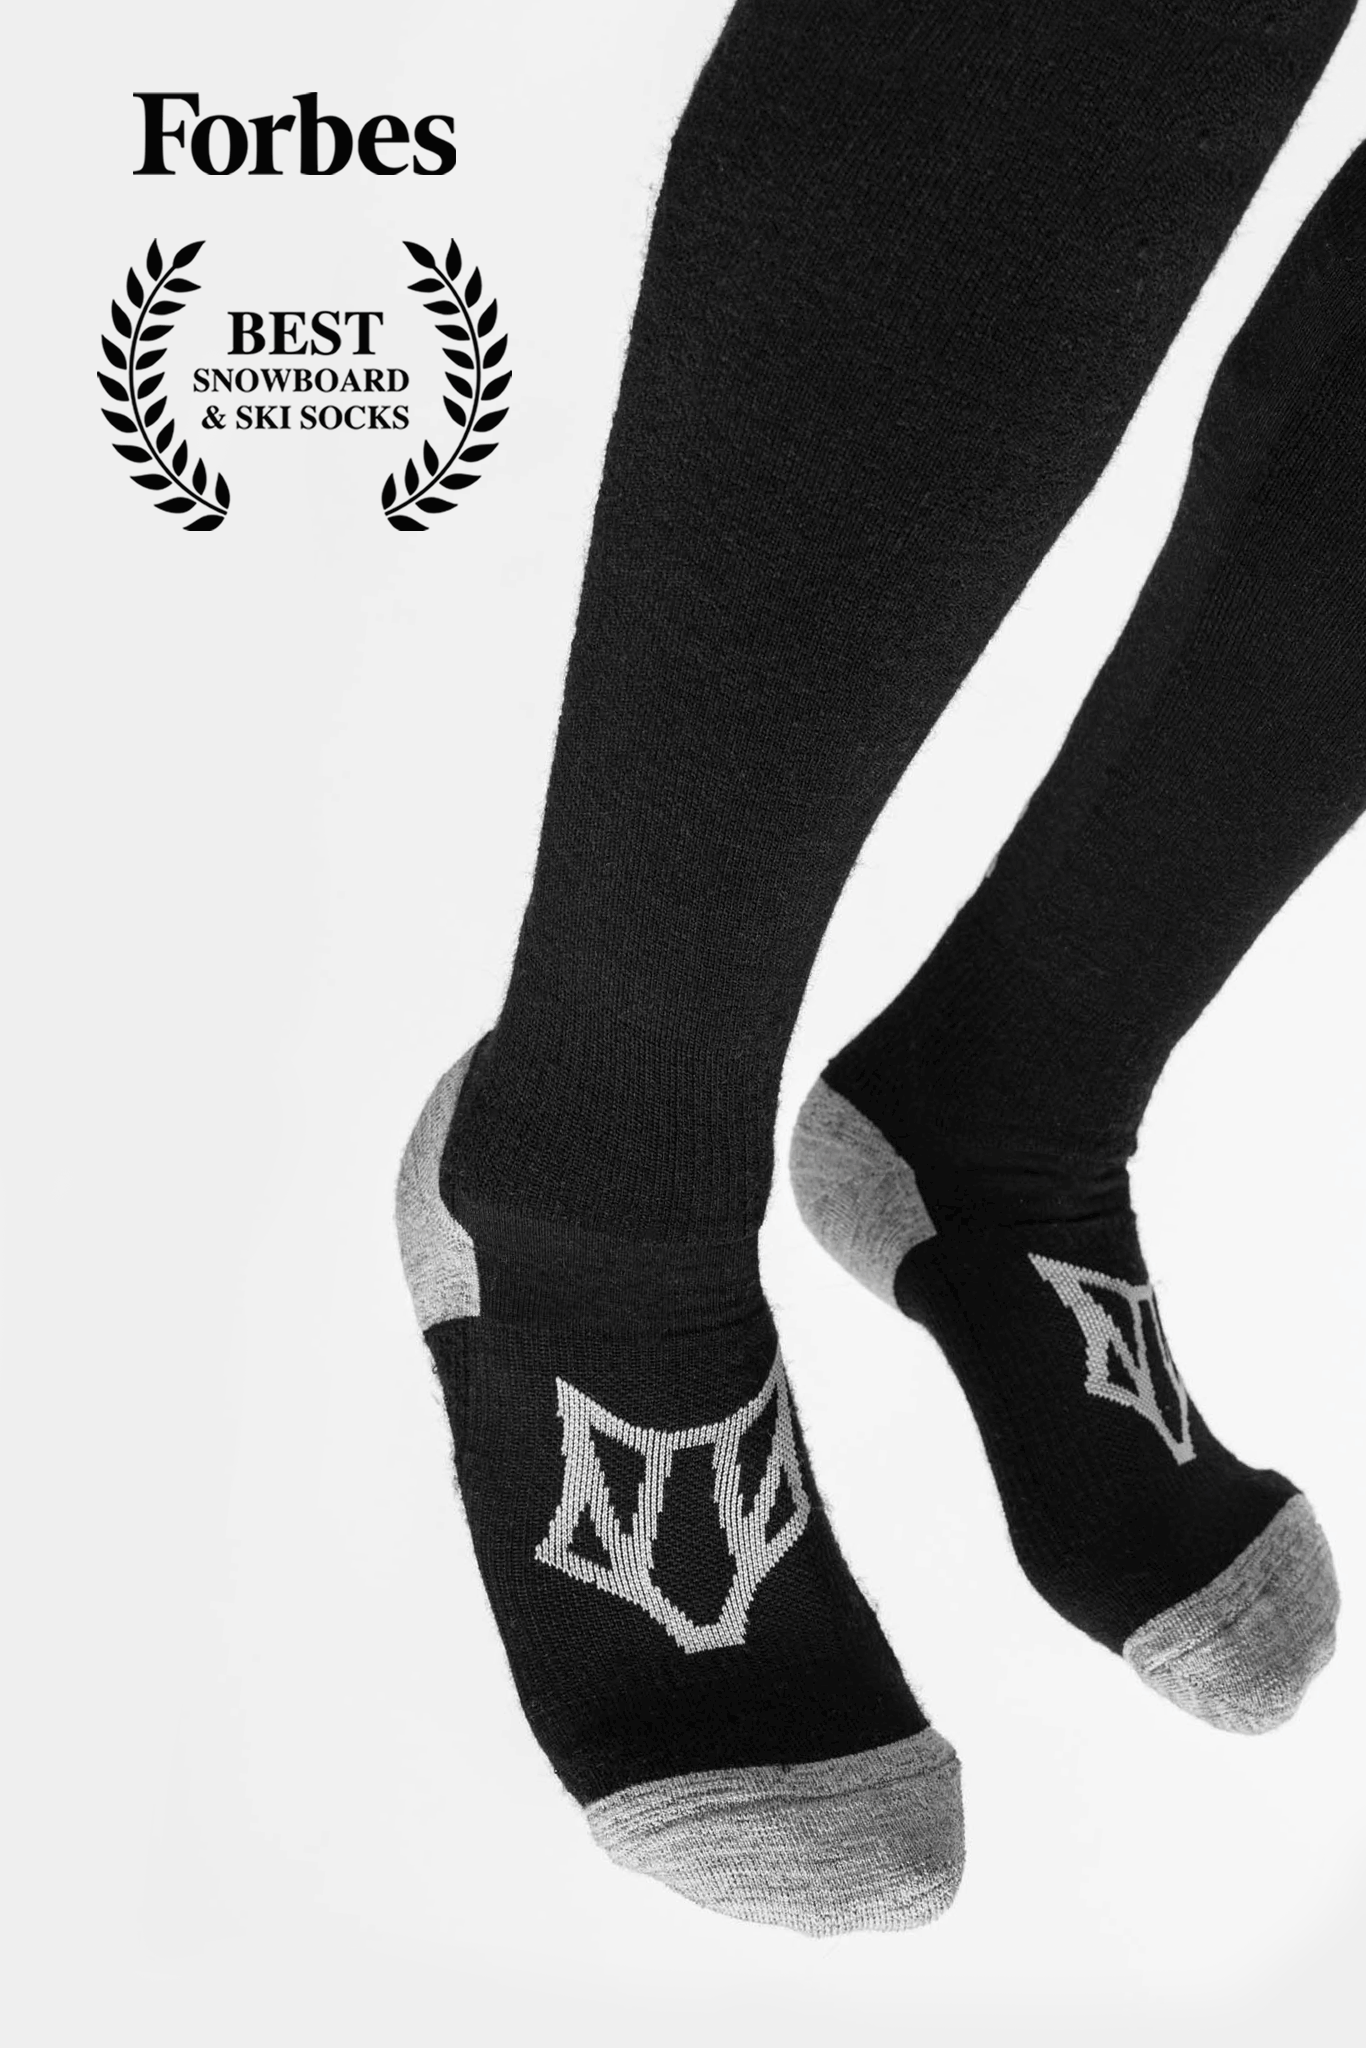 Ulsaak Tech Sock, Merino Wool Snowboard/Ski Socks, Performance Socks